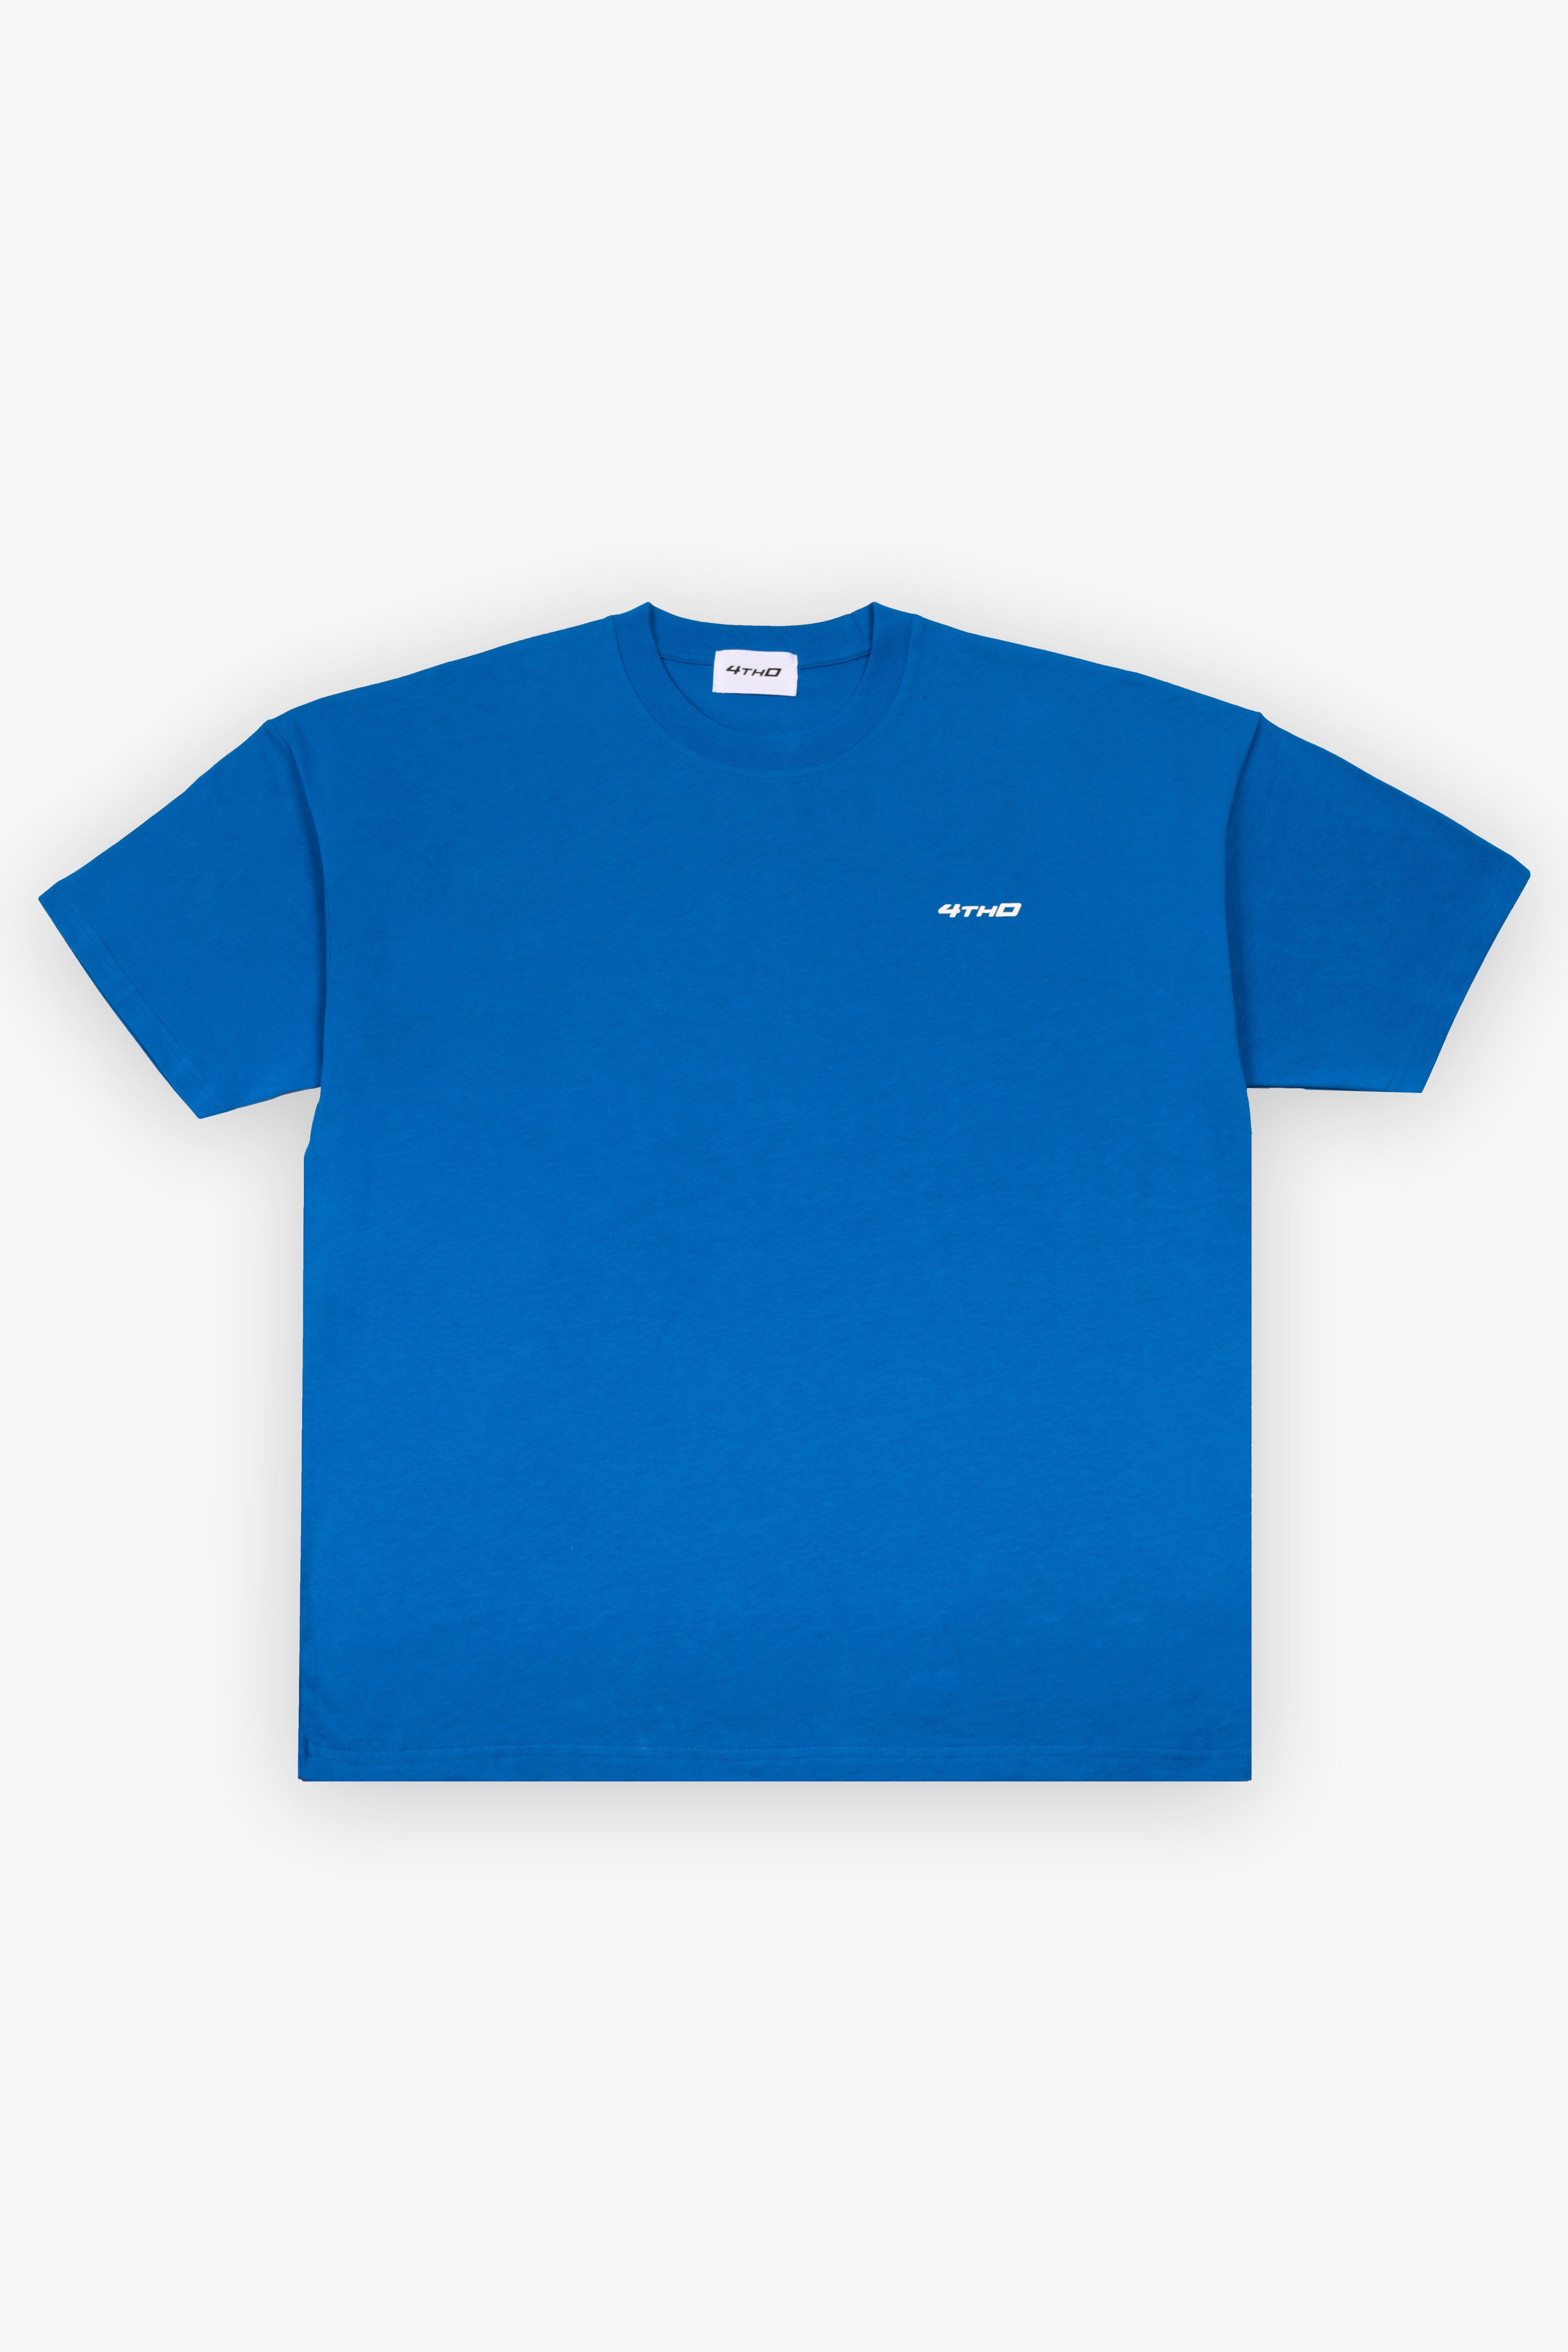 Pantone Shirt - Navy Blue